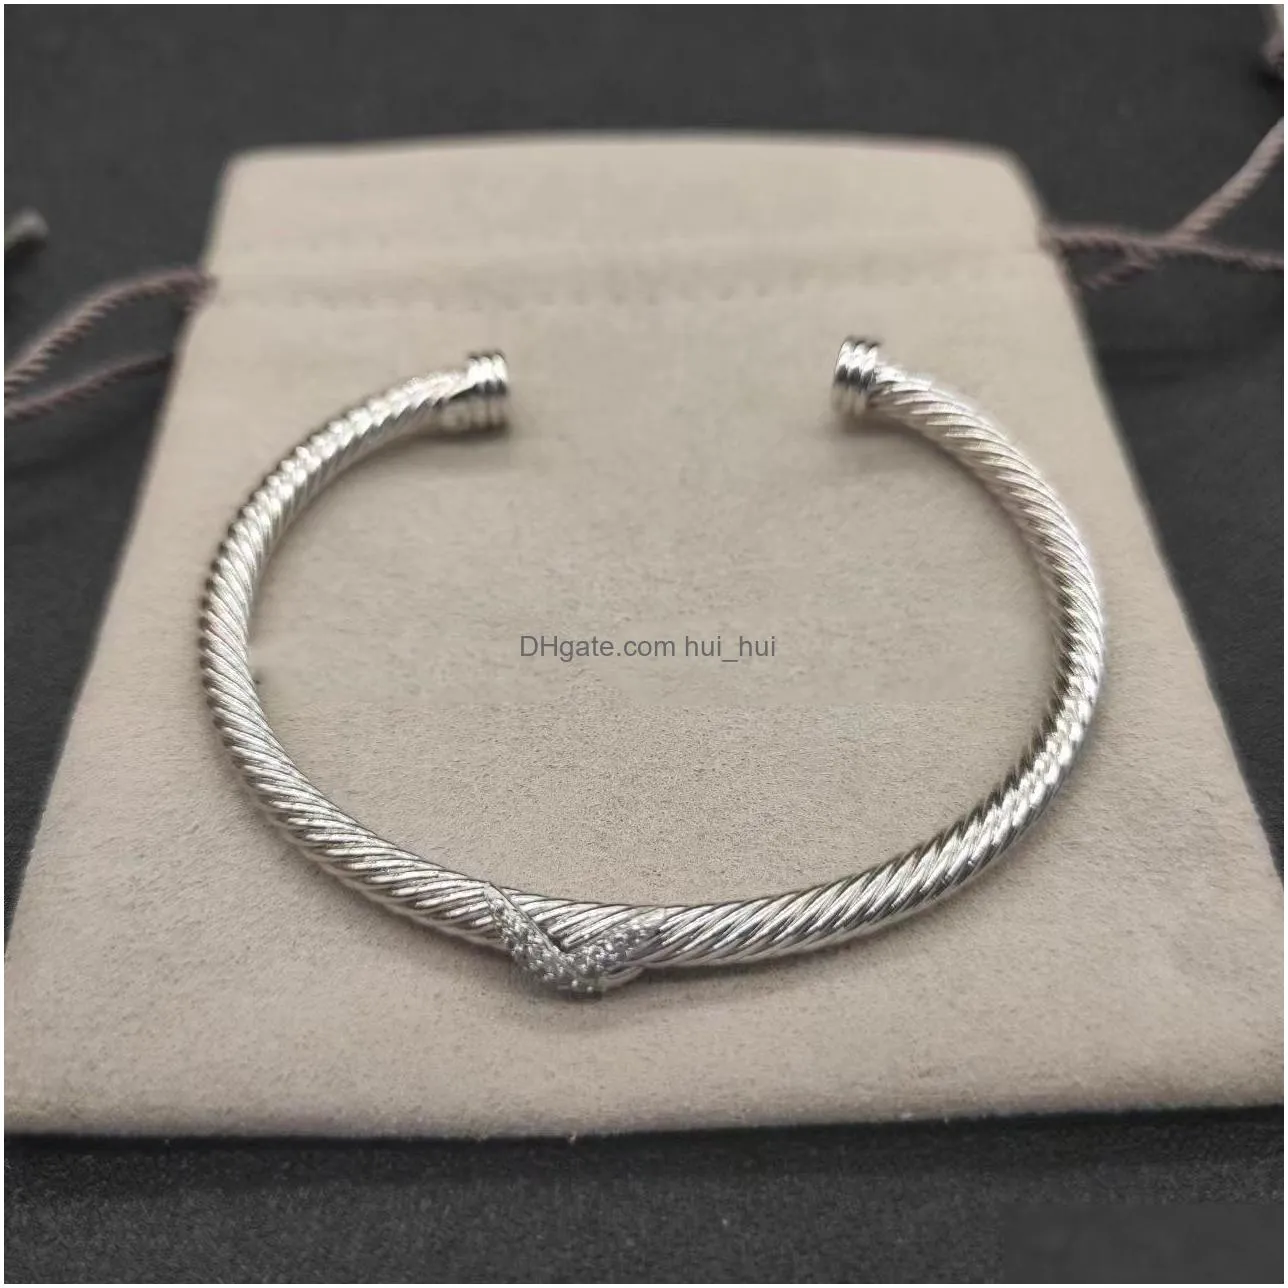 dy bracelet designer cable bracelets fashion jewelry for women men gold silver pearl head cross bangle bracelet open cuff dy jewelry man party christmas